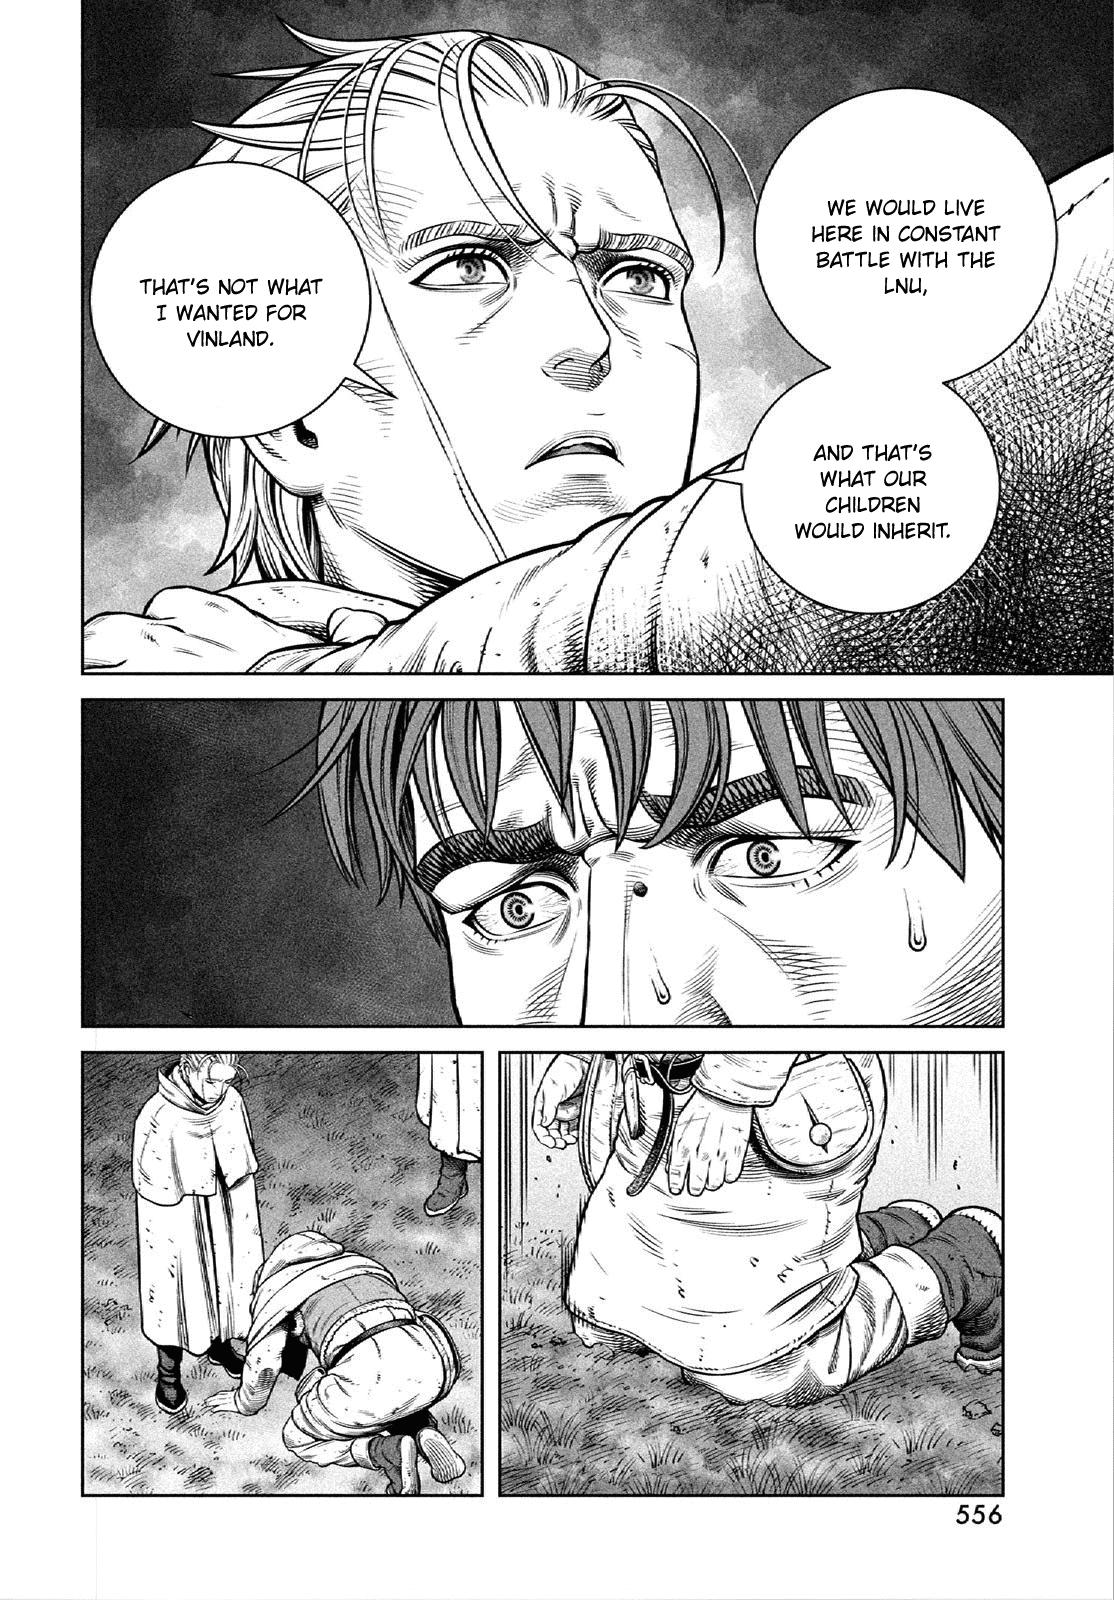 Vinland Saga Manga Manga Chapter - 205 - image 23